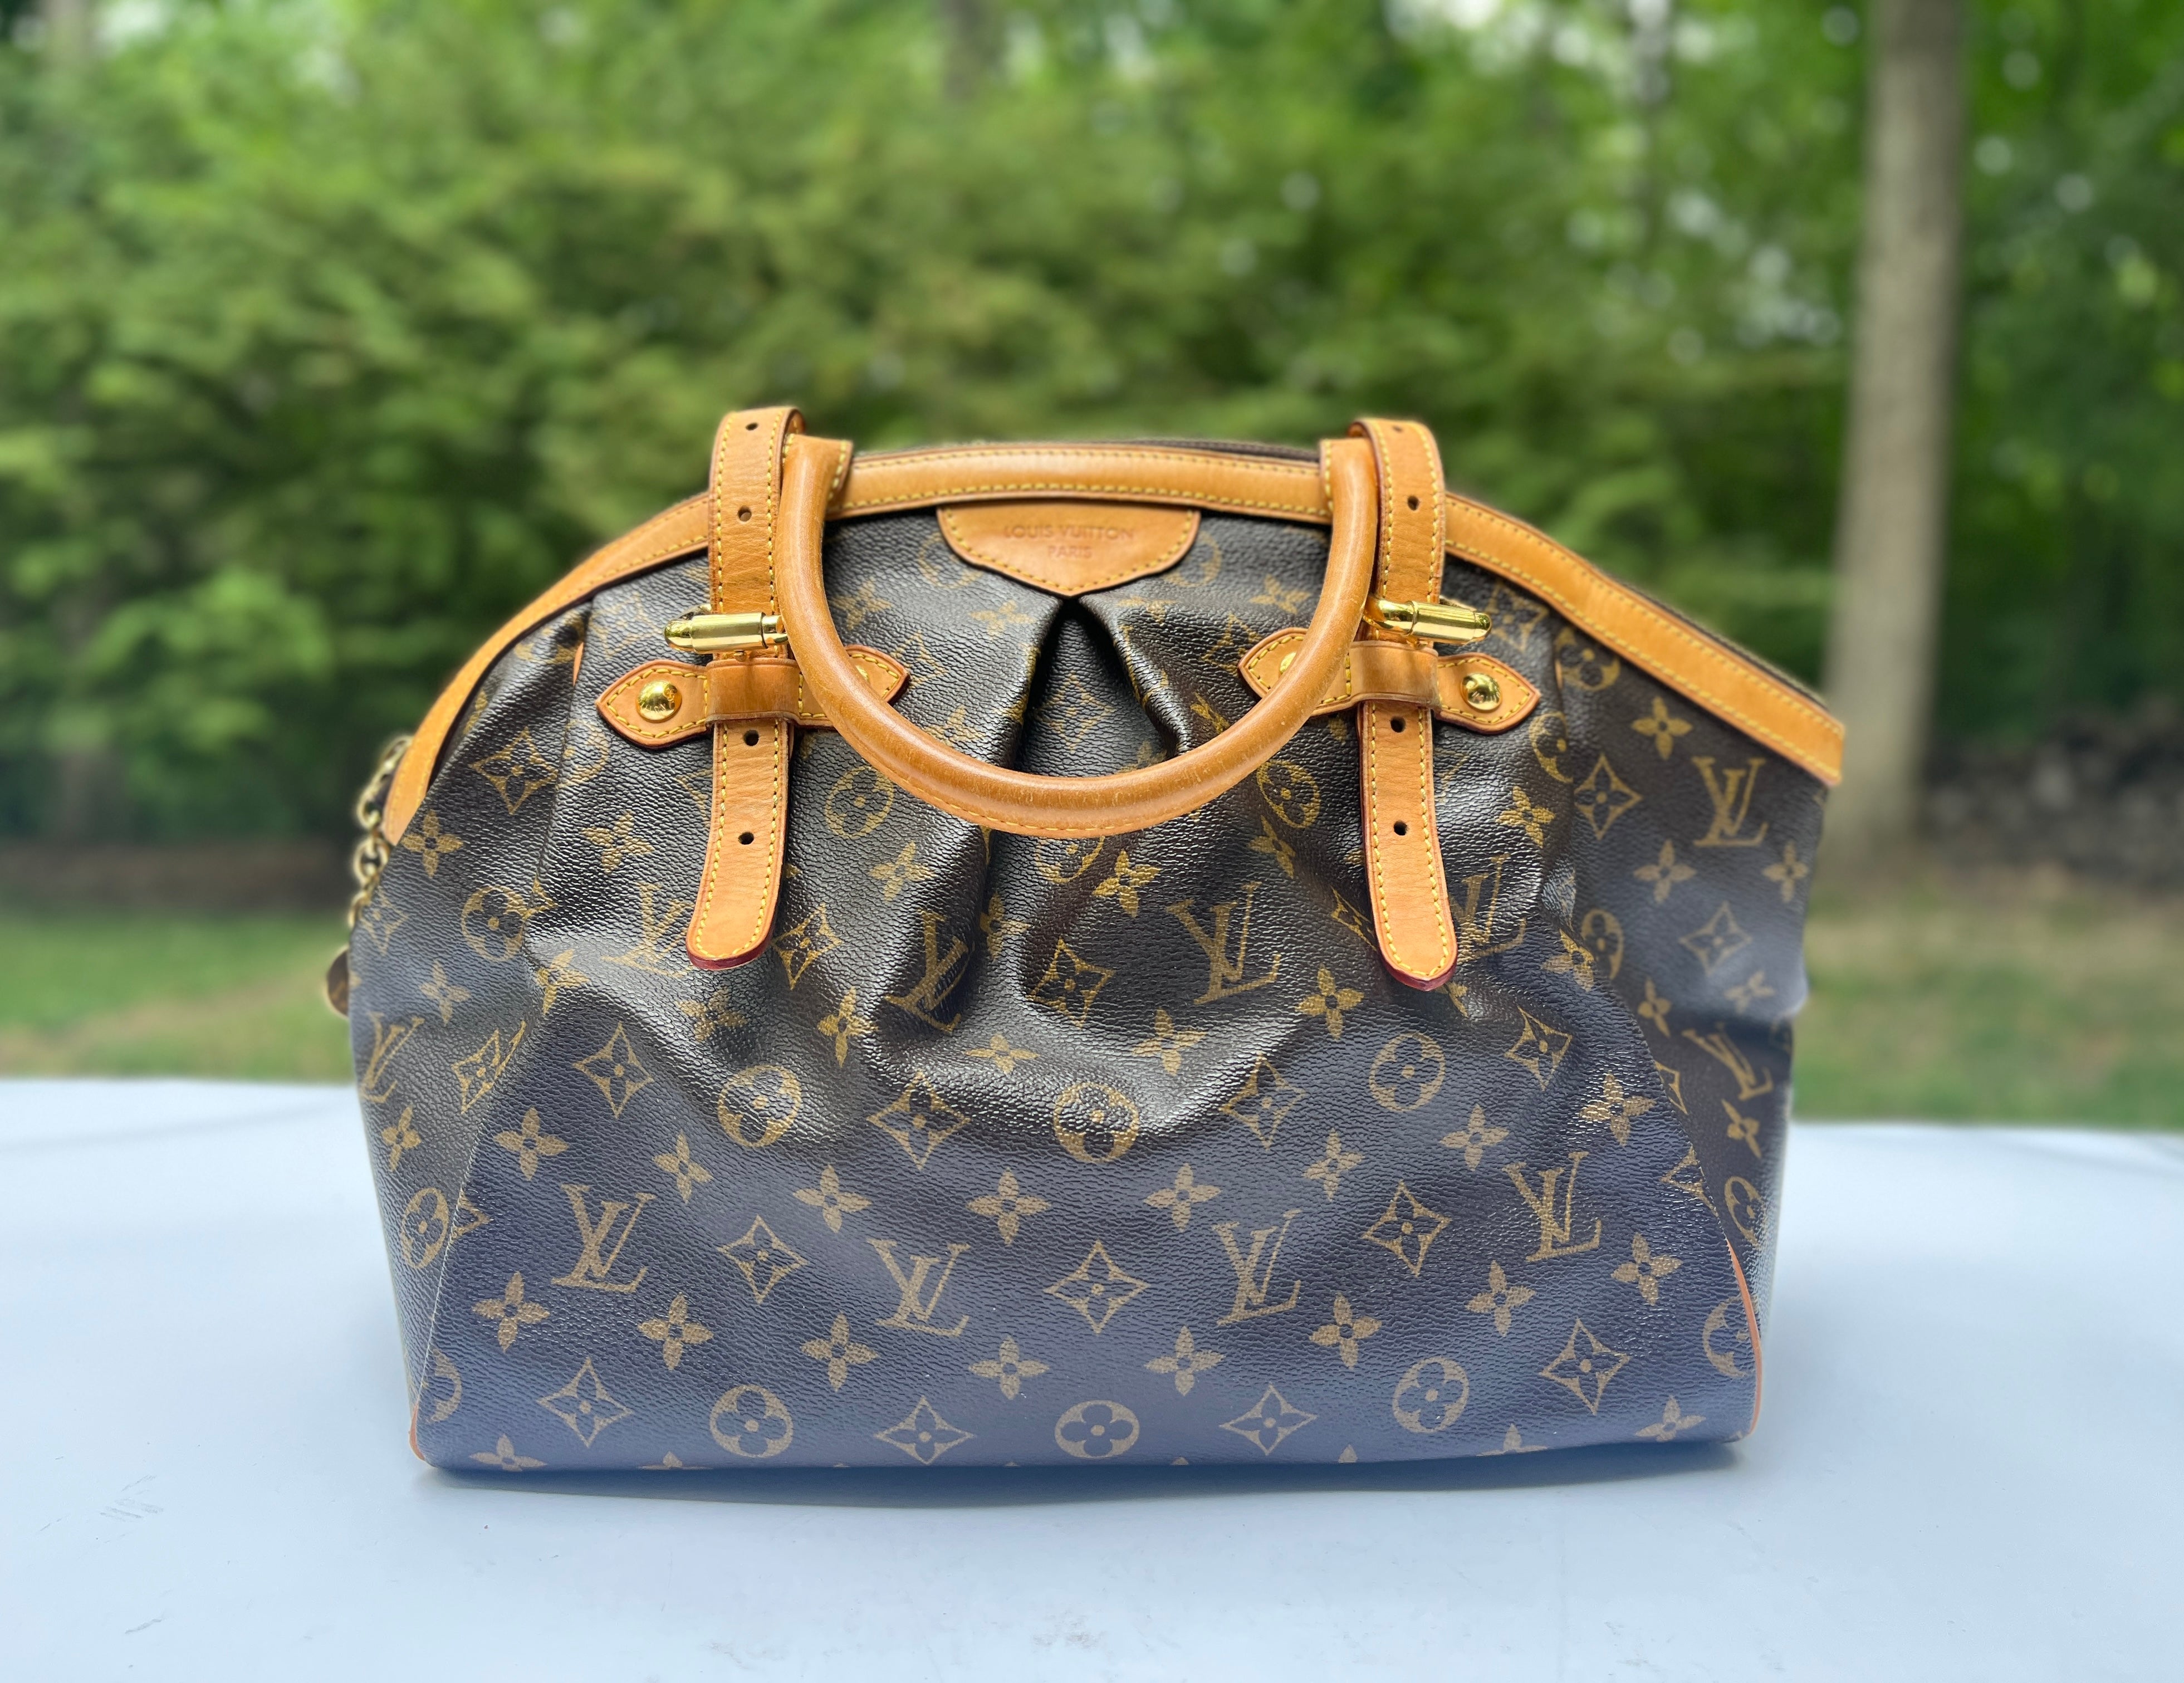 Louis Vuitton Authenticated Tivoli Handbag